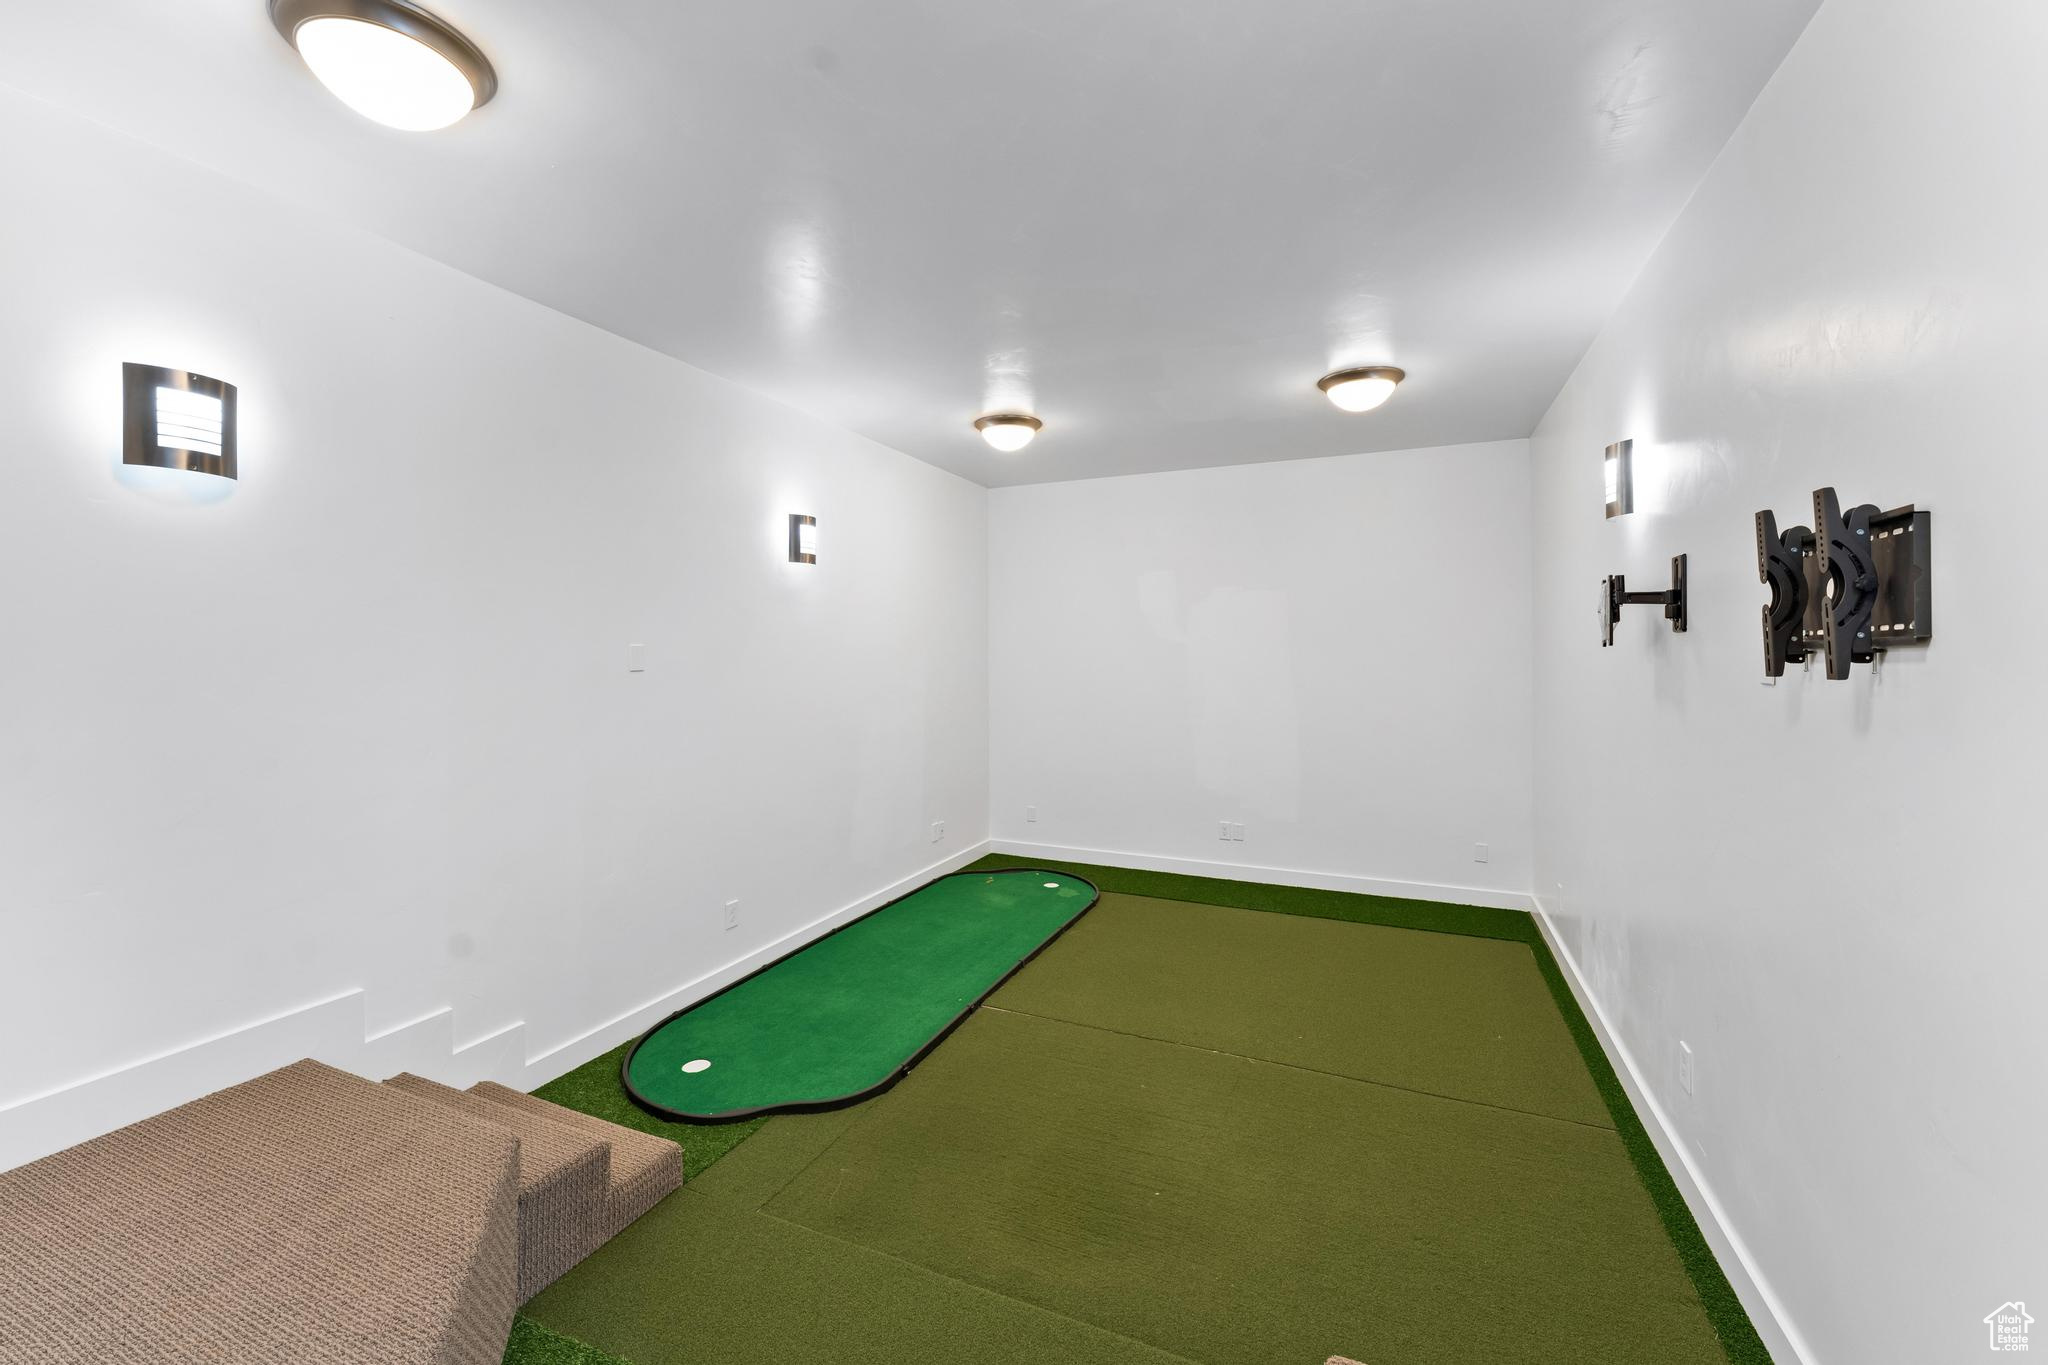 Rec room with golf simulator and carpet flooring